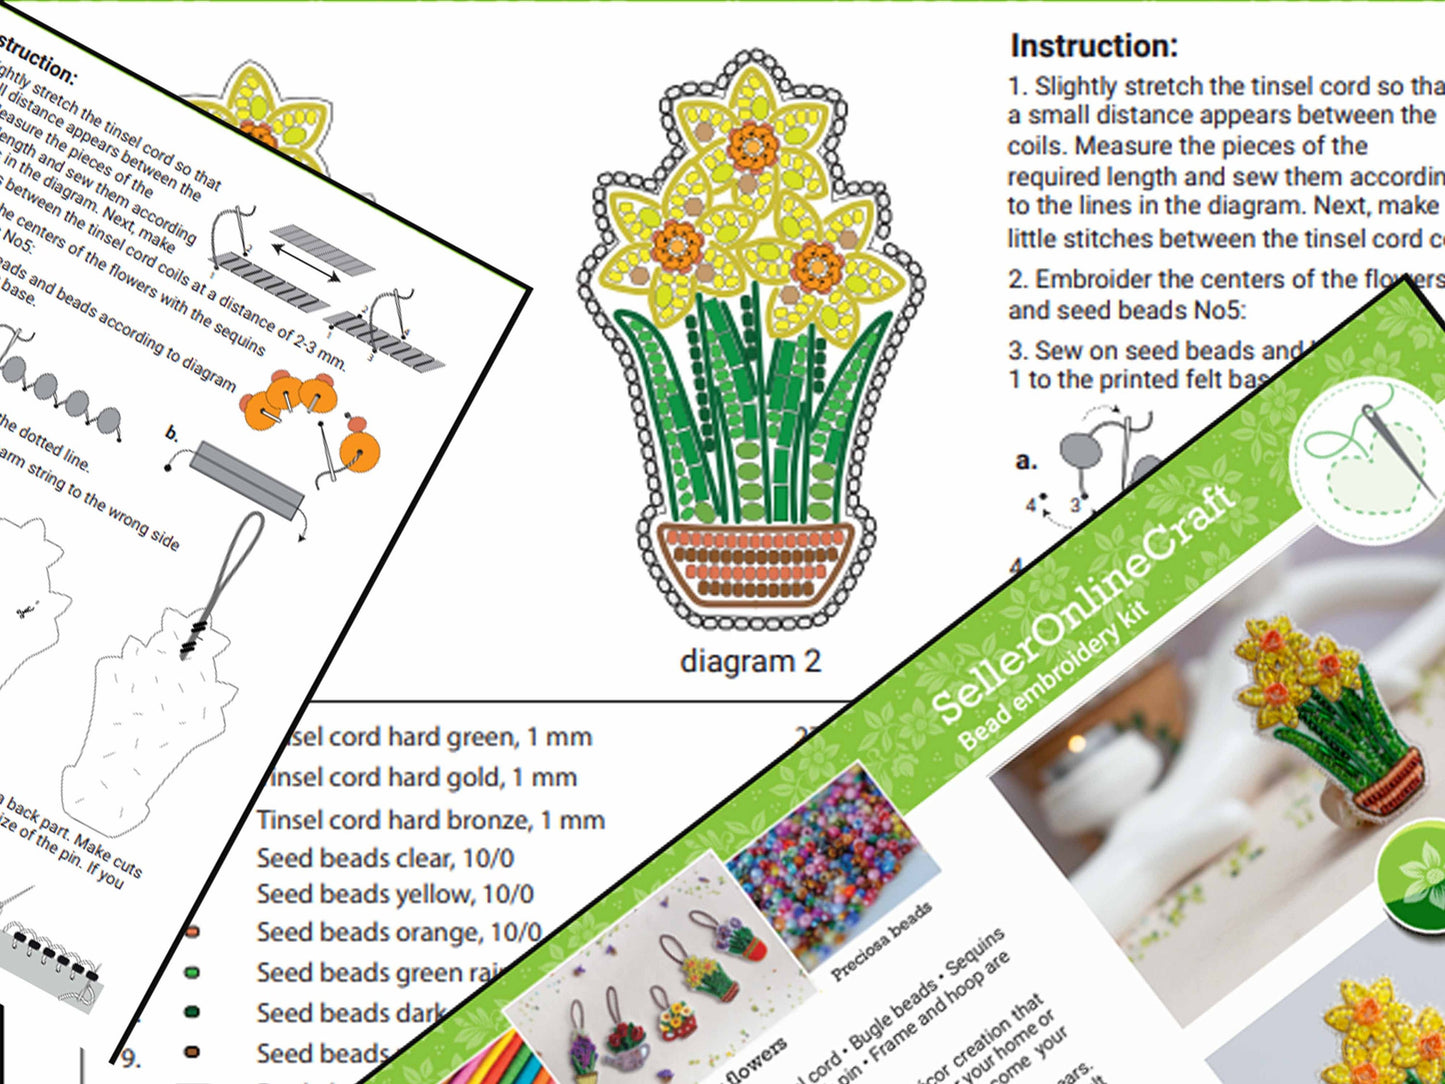 Daffodil Bead embroidery kit. Seed Bead Brooch kit. DIY Craft kit. Beadweaving Kit. Needlework beading. Handmade Jewelry Making Kit